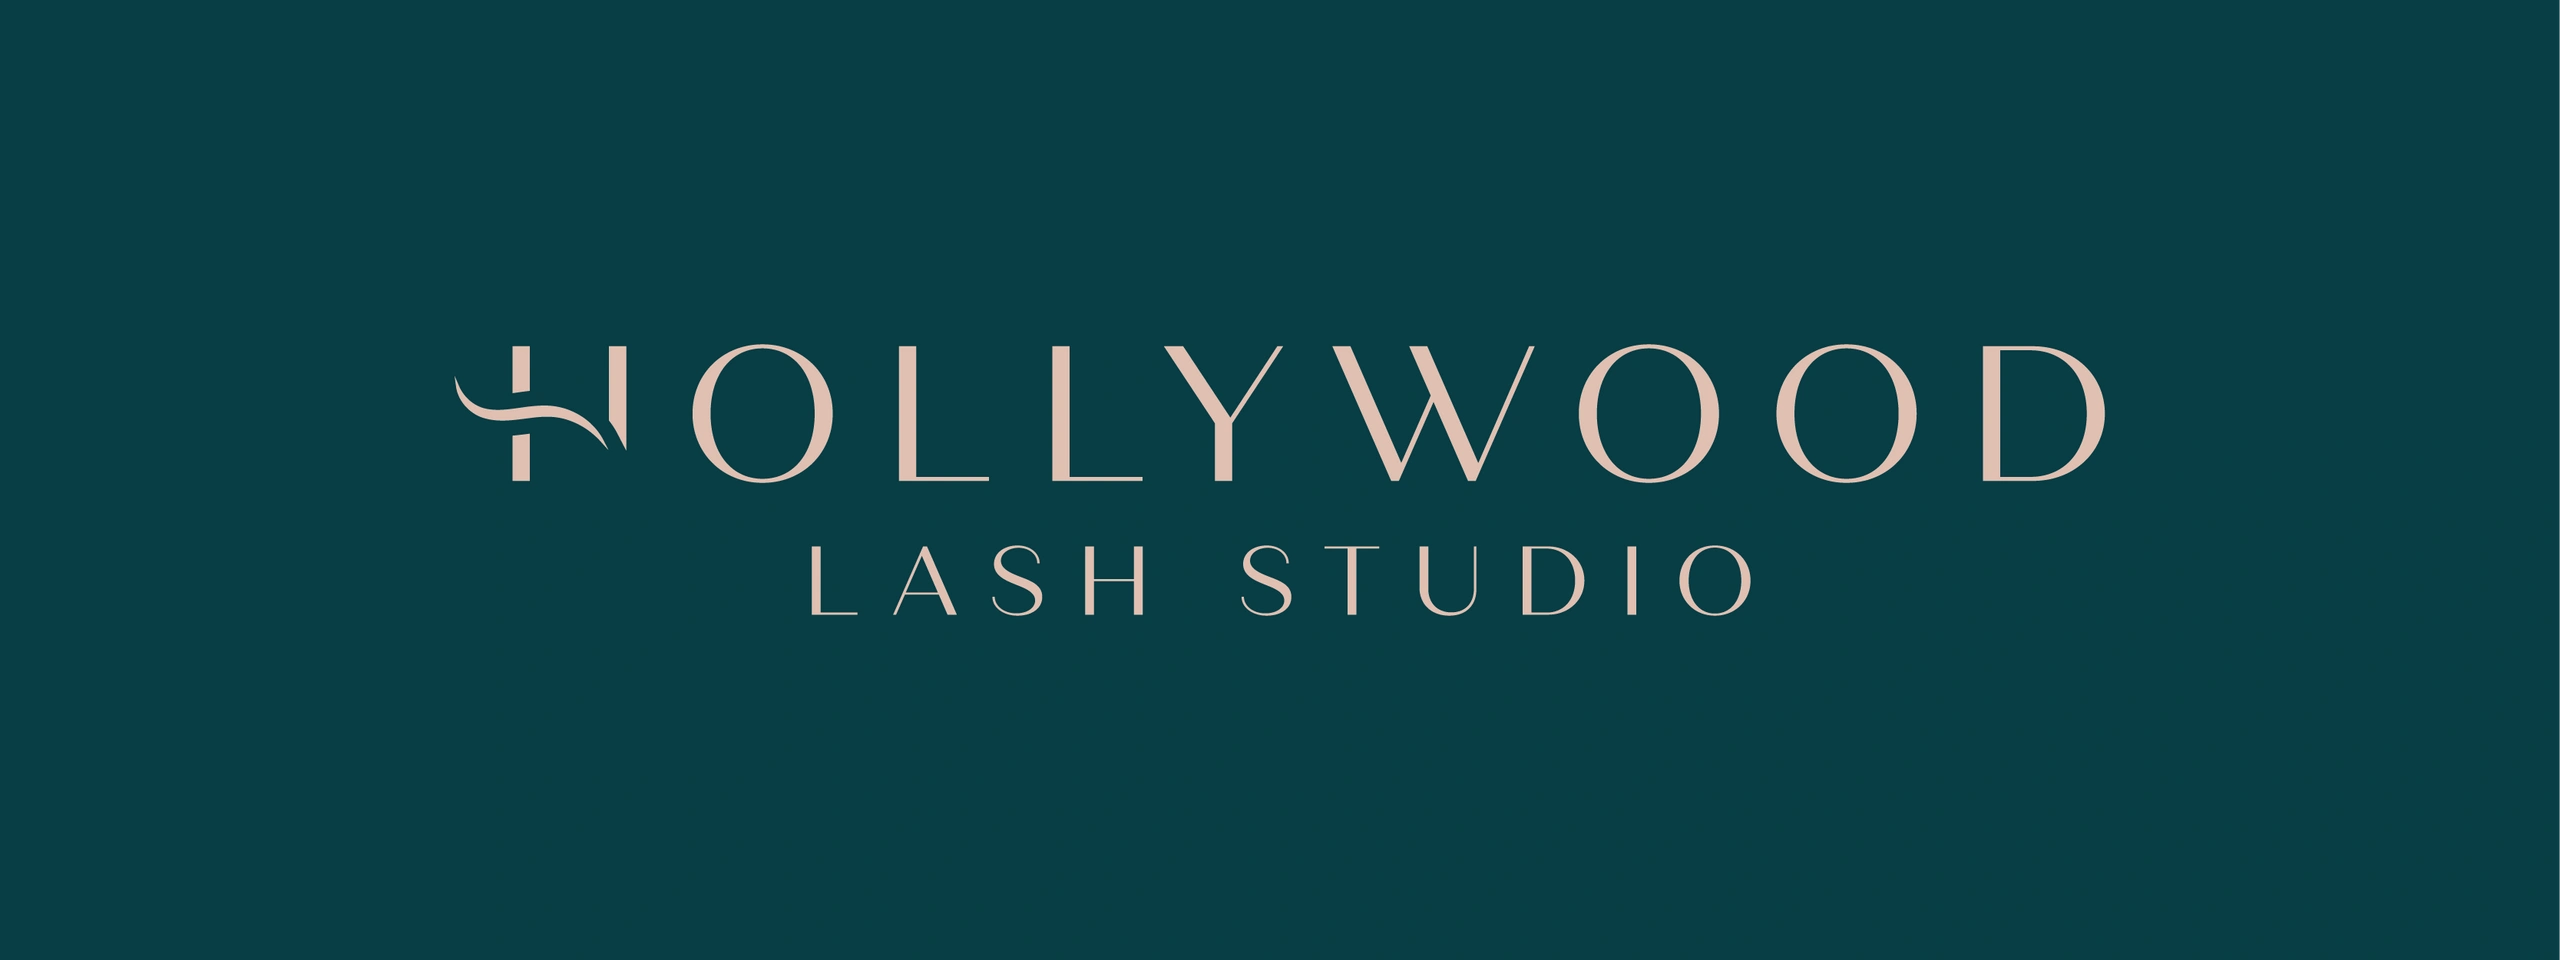 Hollywood Lash Studio Logo